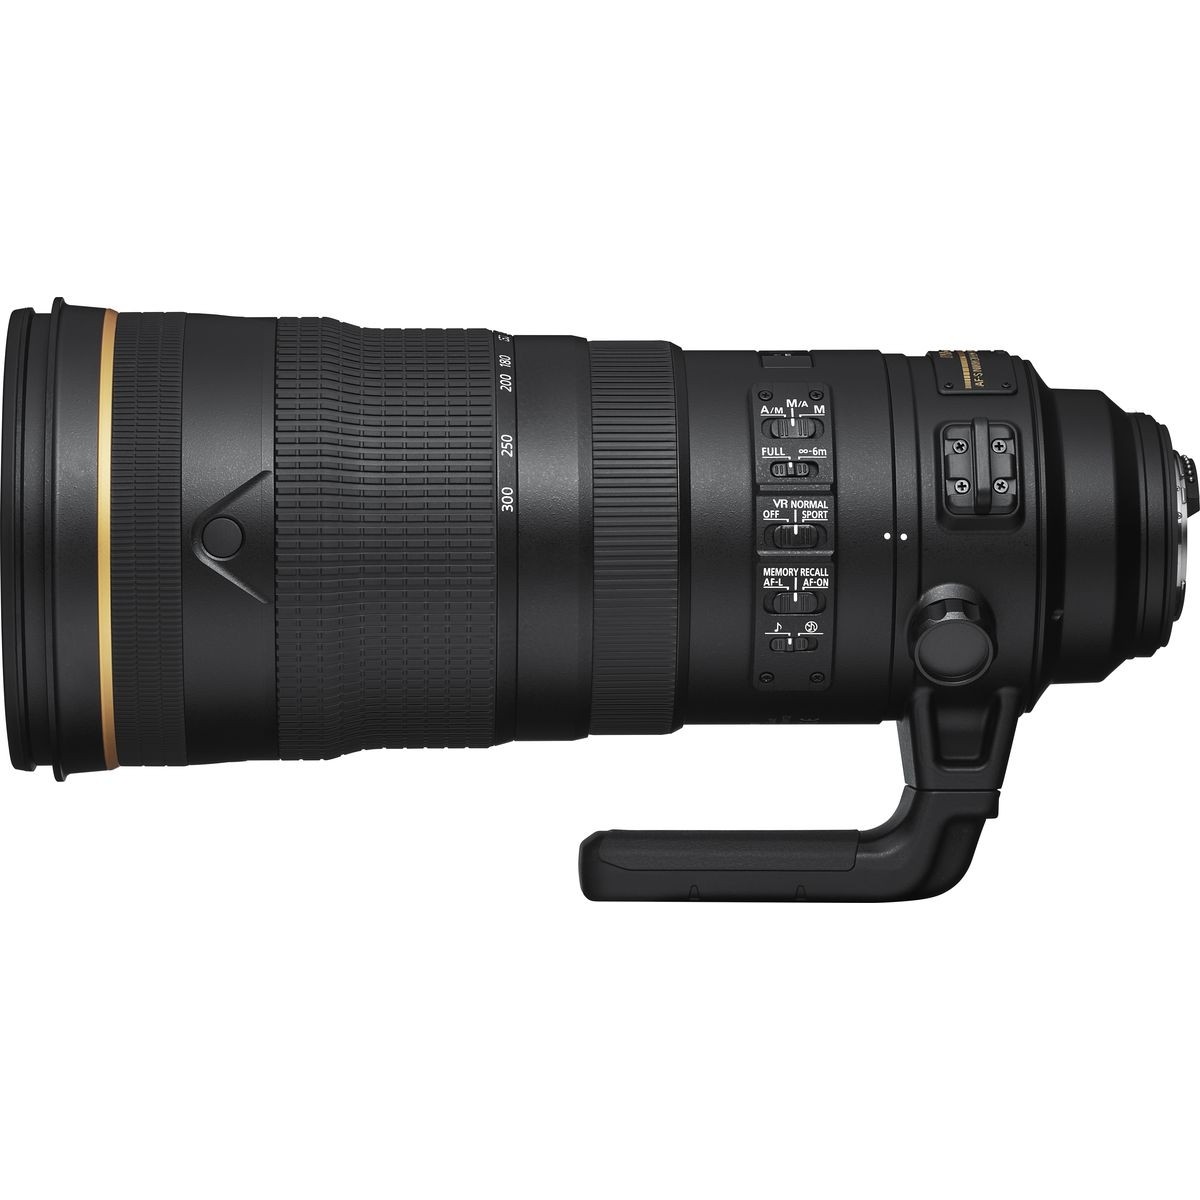 Nikon 120-300MM F/2.8E FL ED SR VR